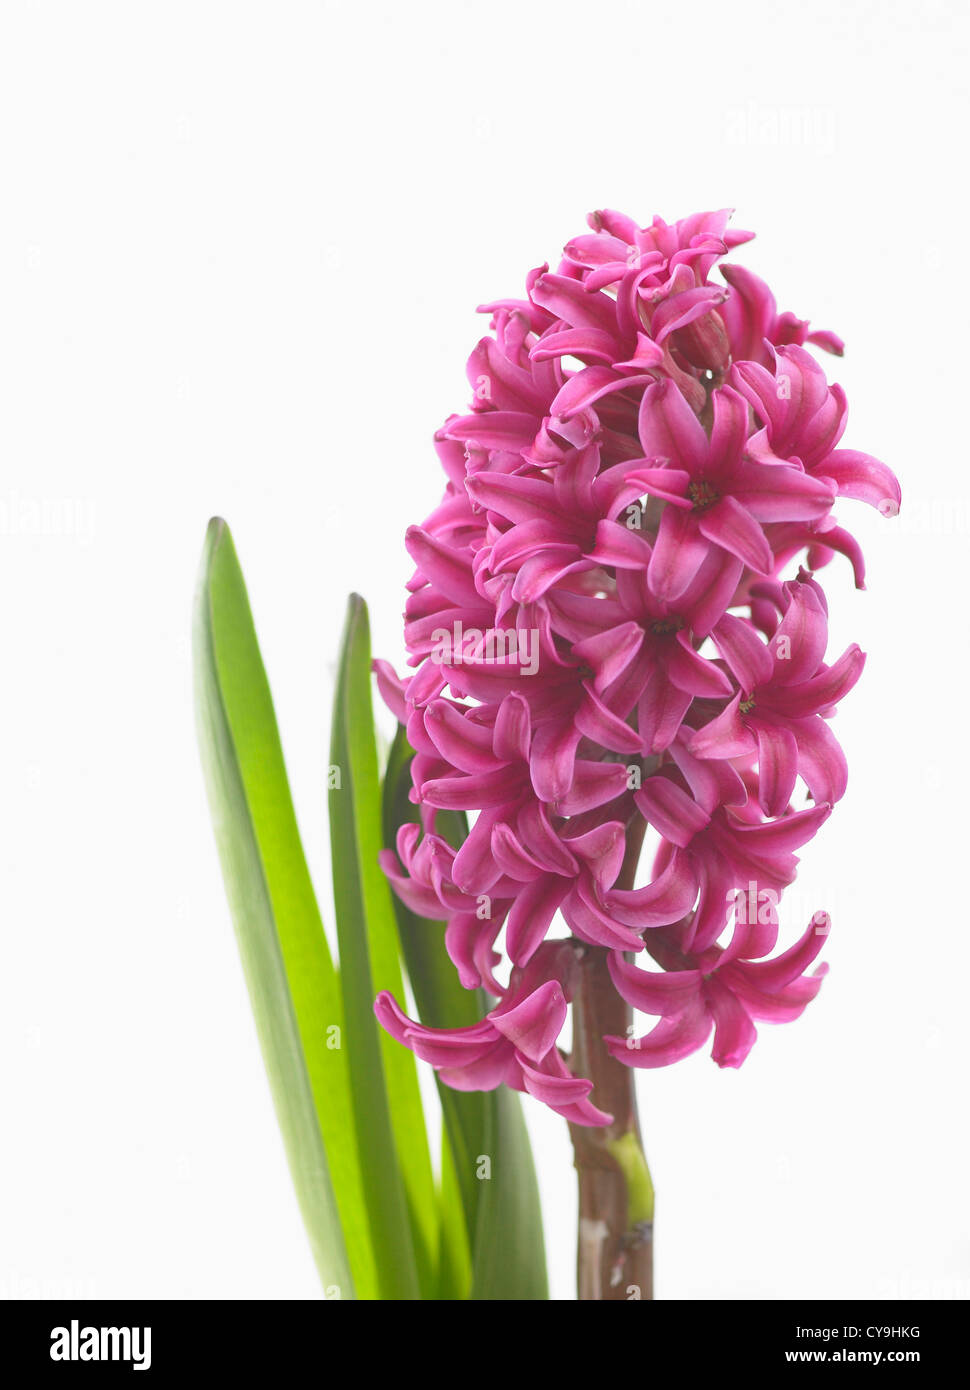 Single pink flowering stem of Hyacinthus orientalis 'Woodstock', Hyacinth, against a white background, Stock Photo